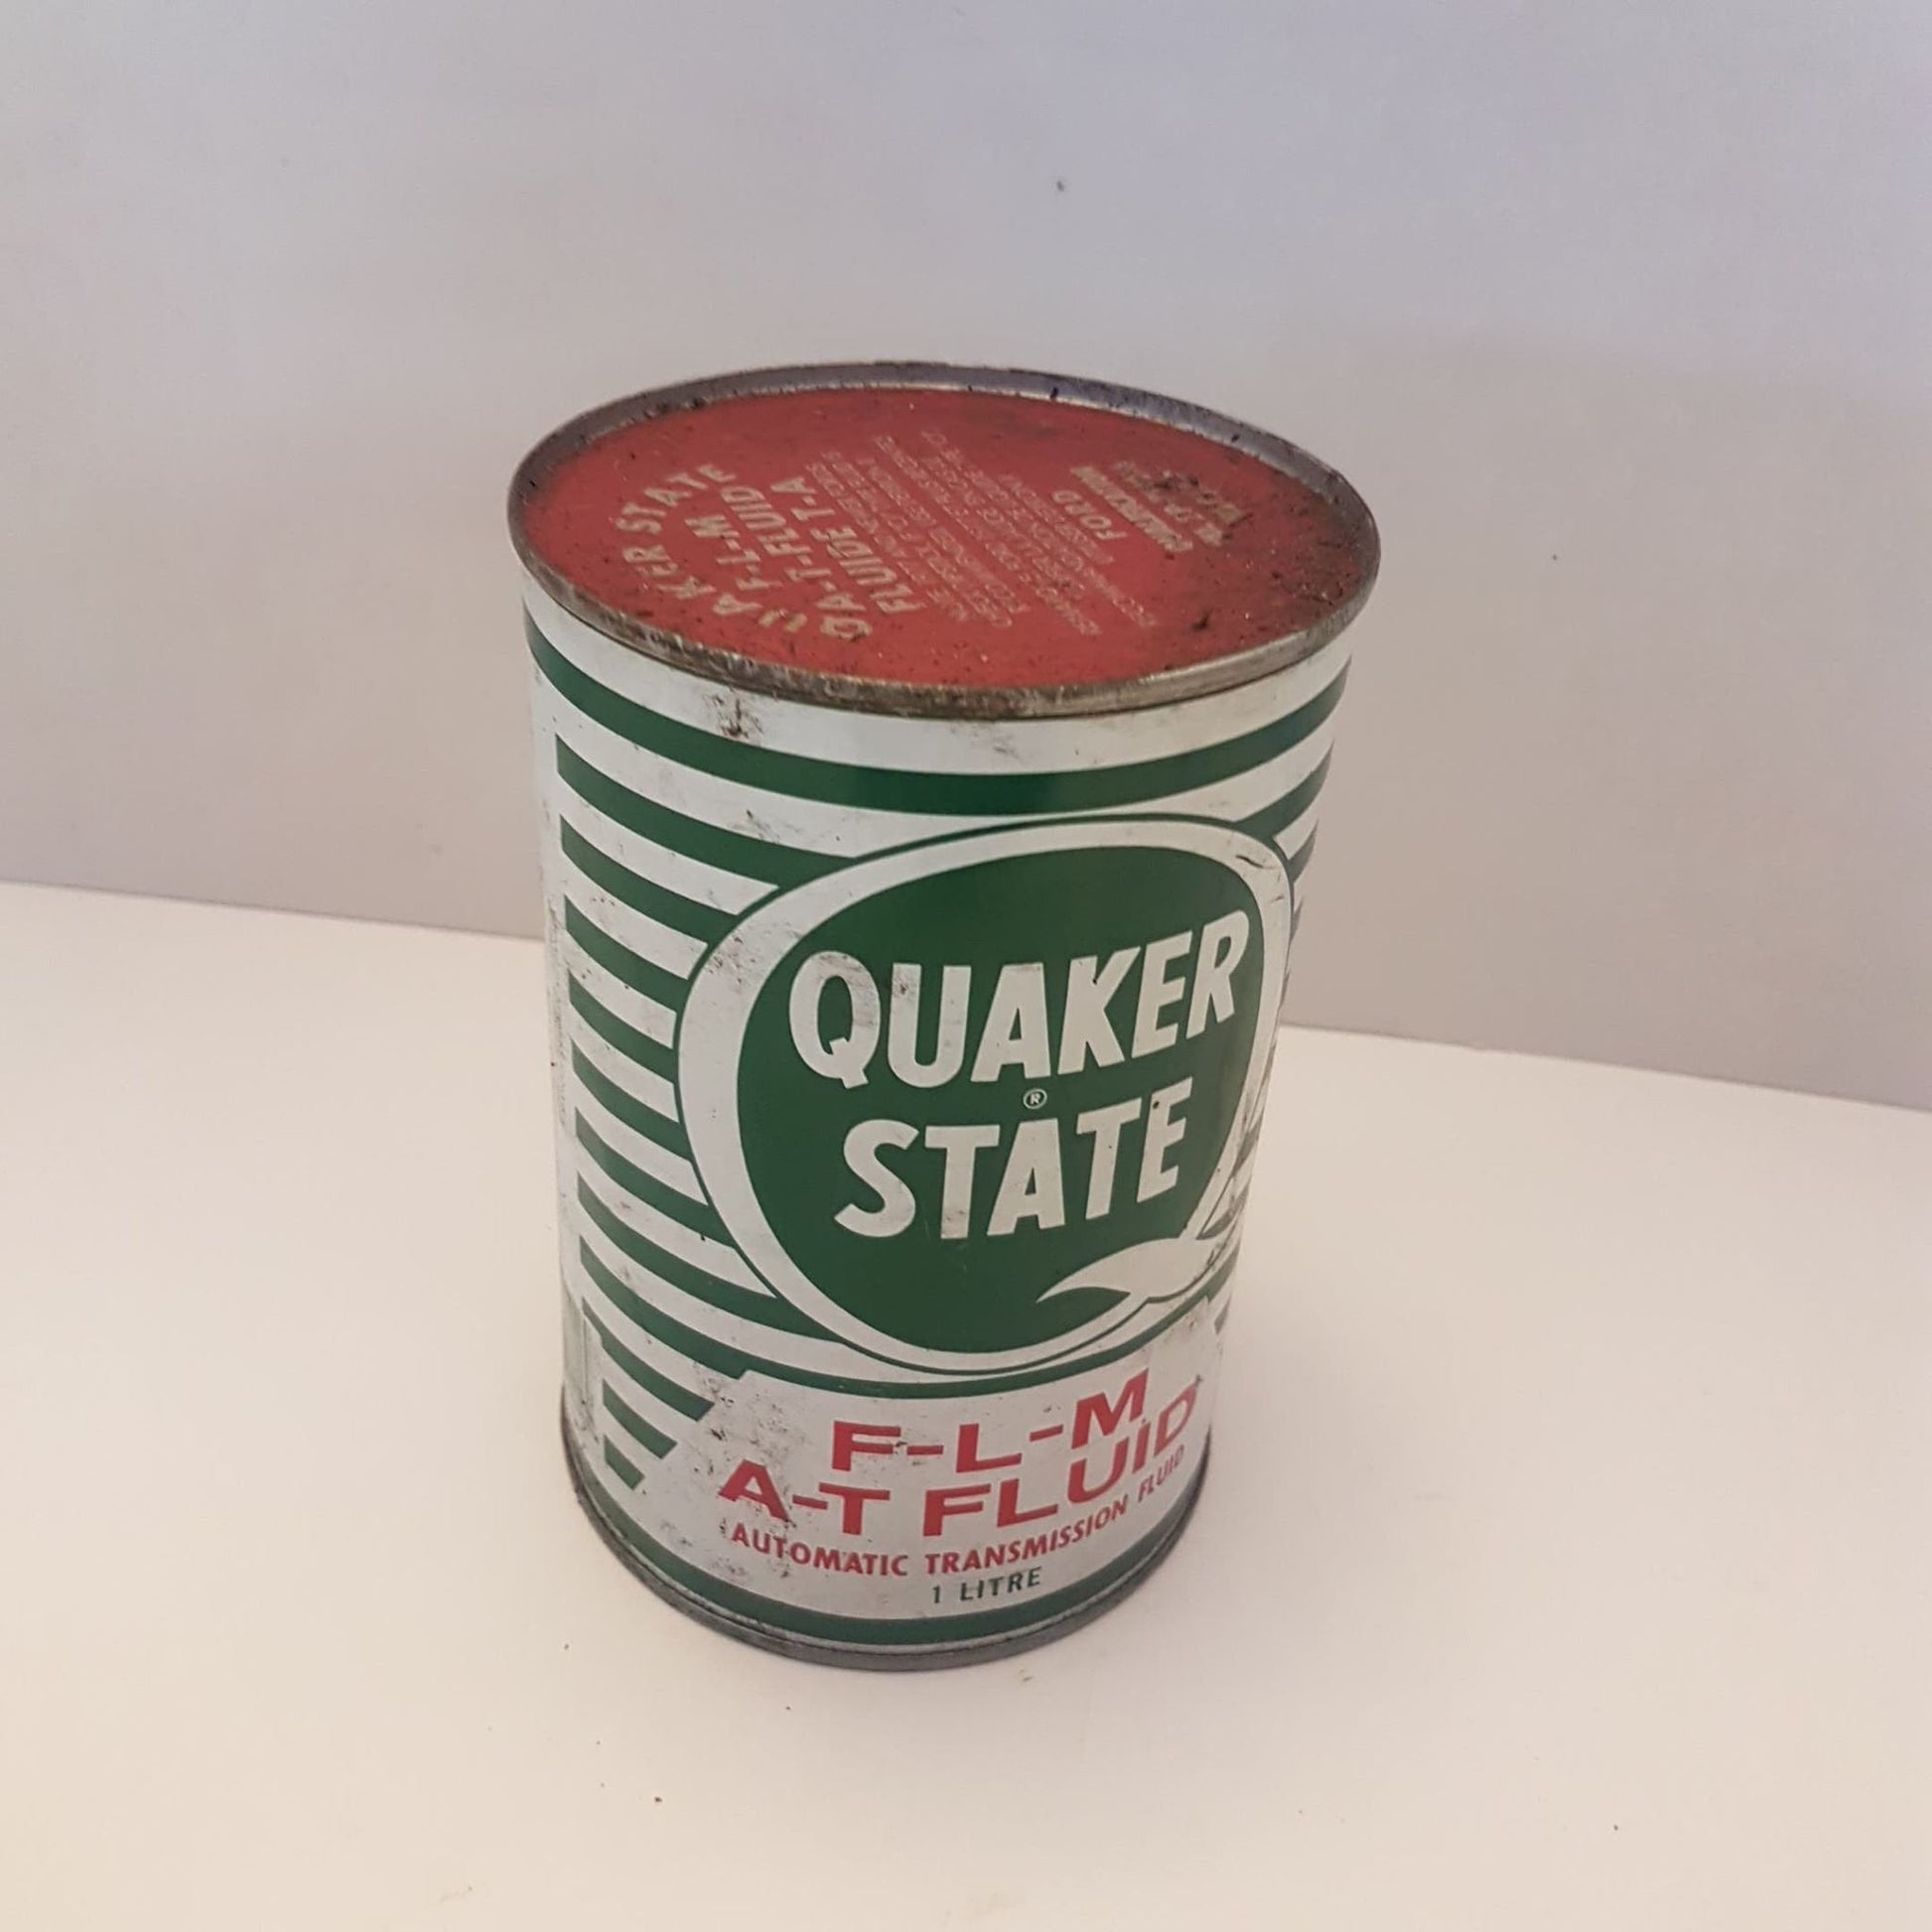 quaker state f-l-m transmission fluid oil can